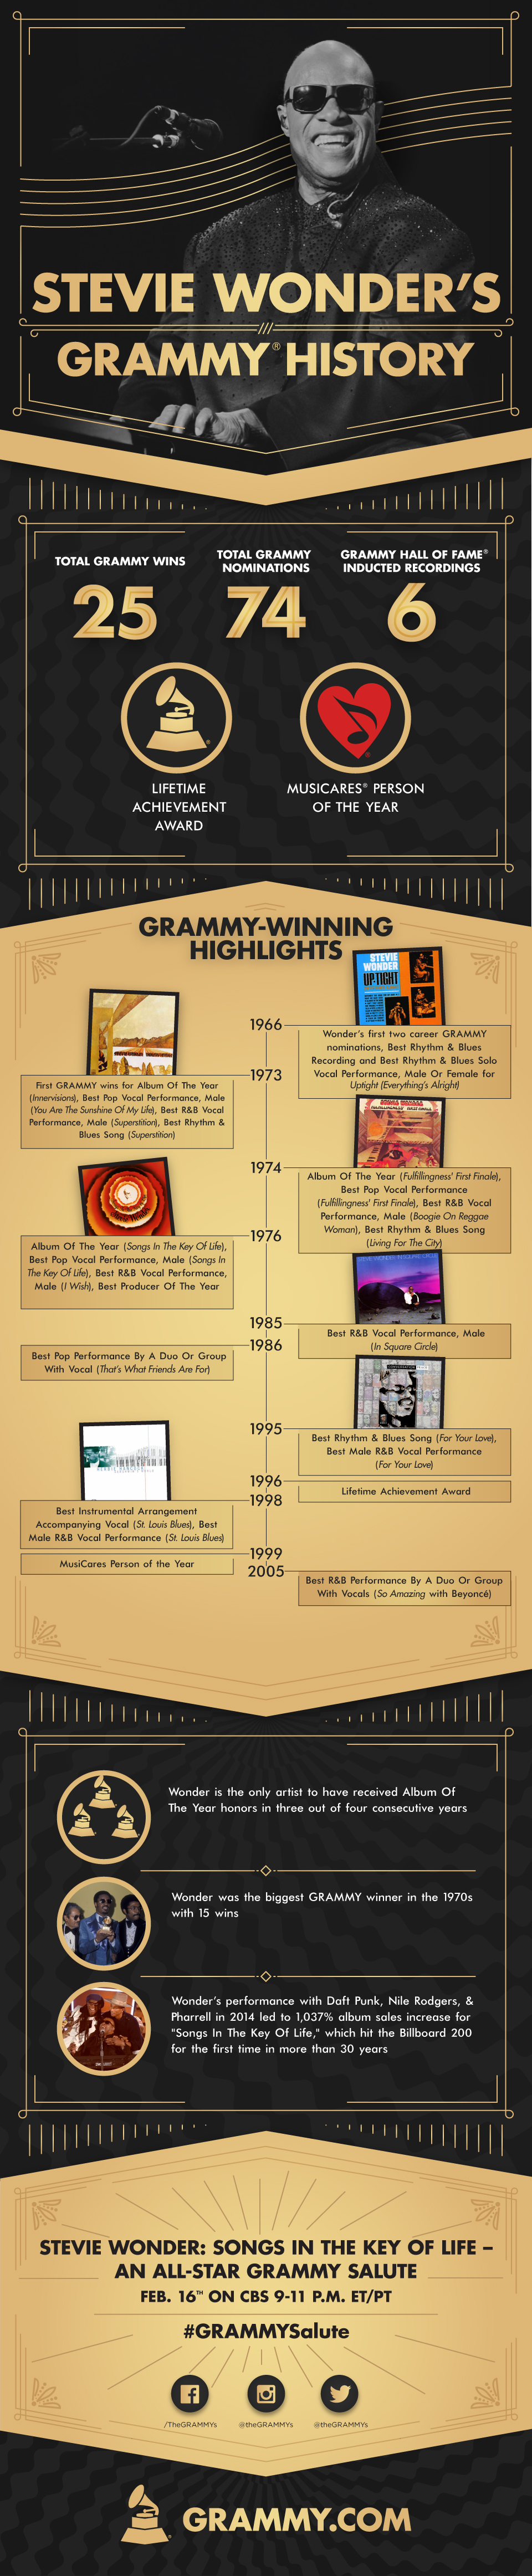 A Look At Stevie Wonder’s GRAMMY History